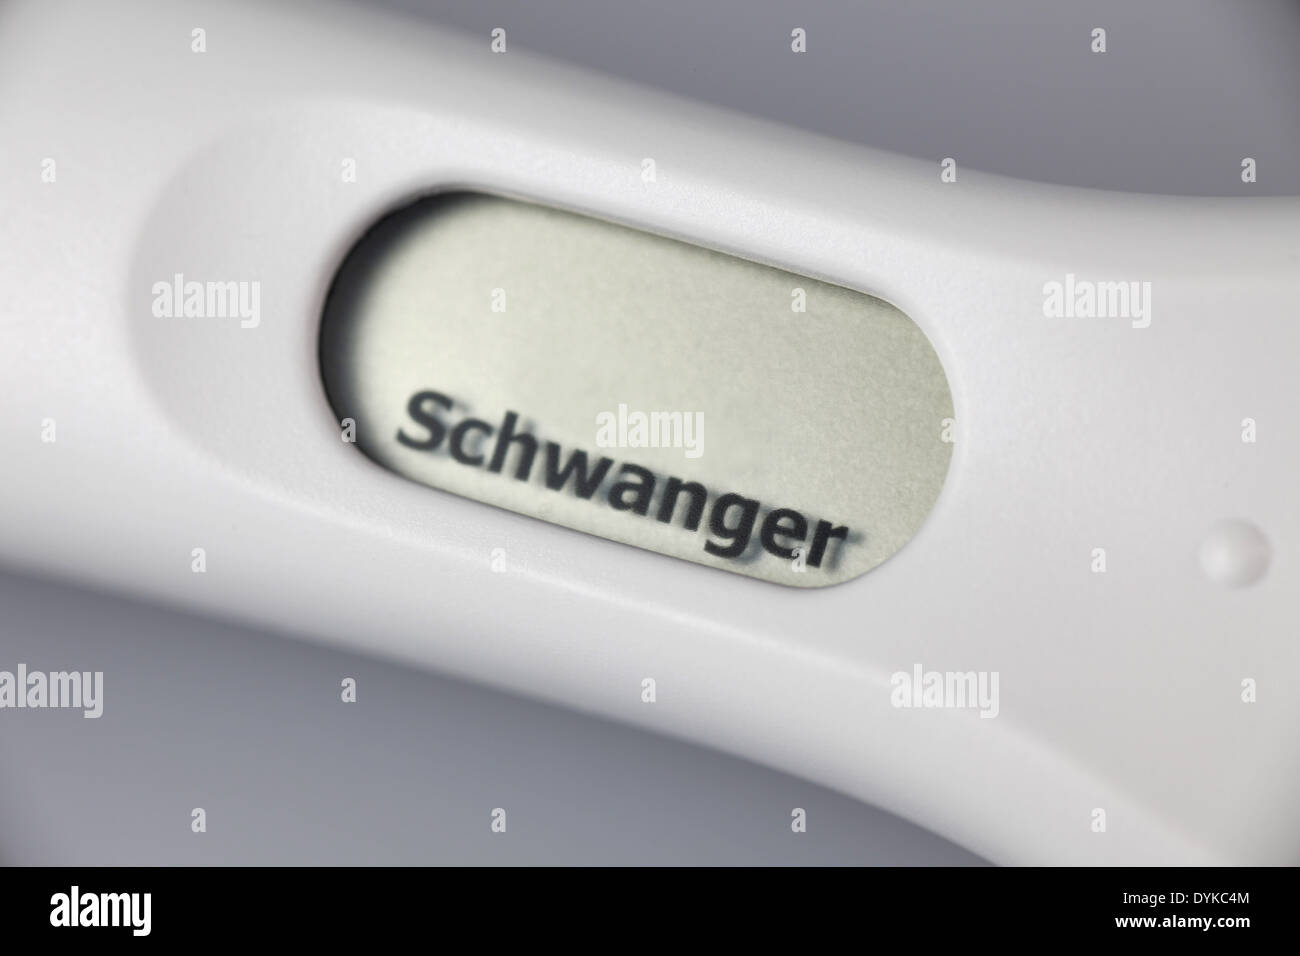 Schwangerschaftstest pregnancy test hi-res stock photography and images -  Alamy